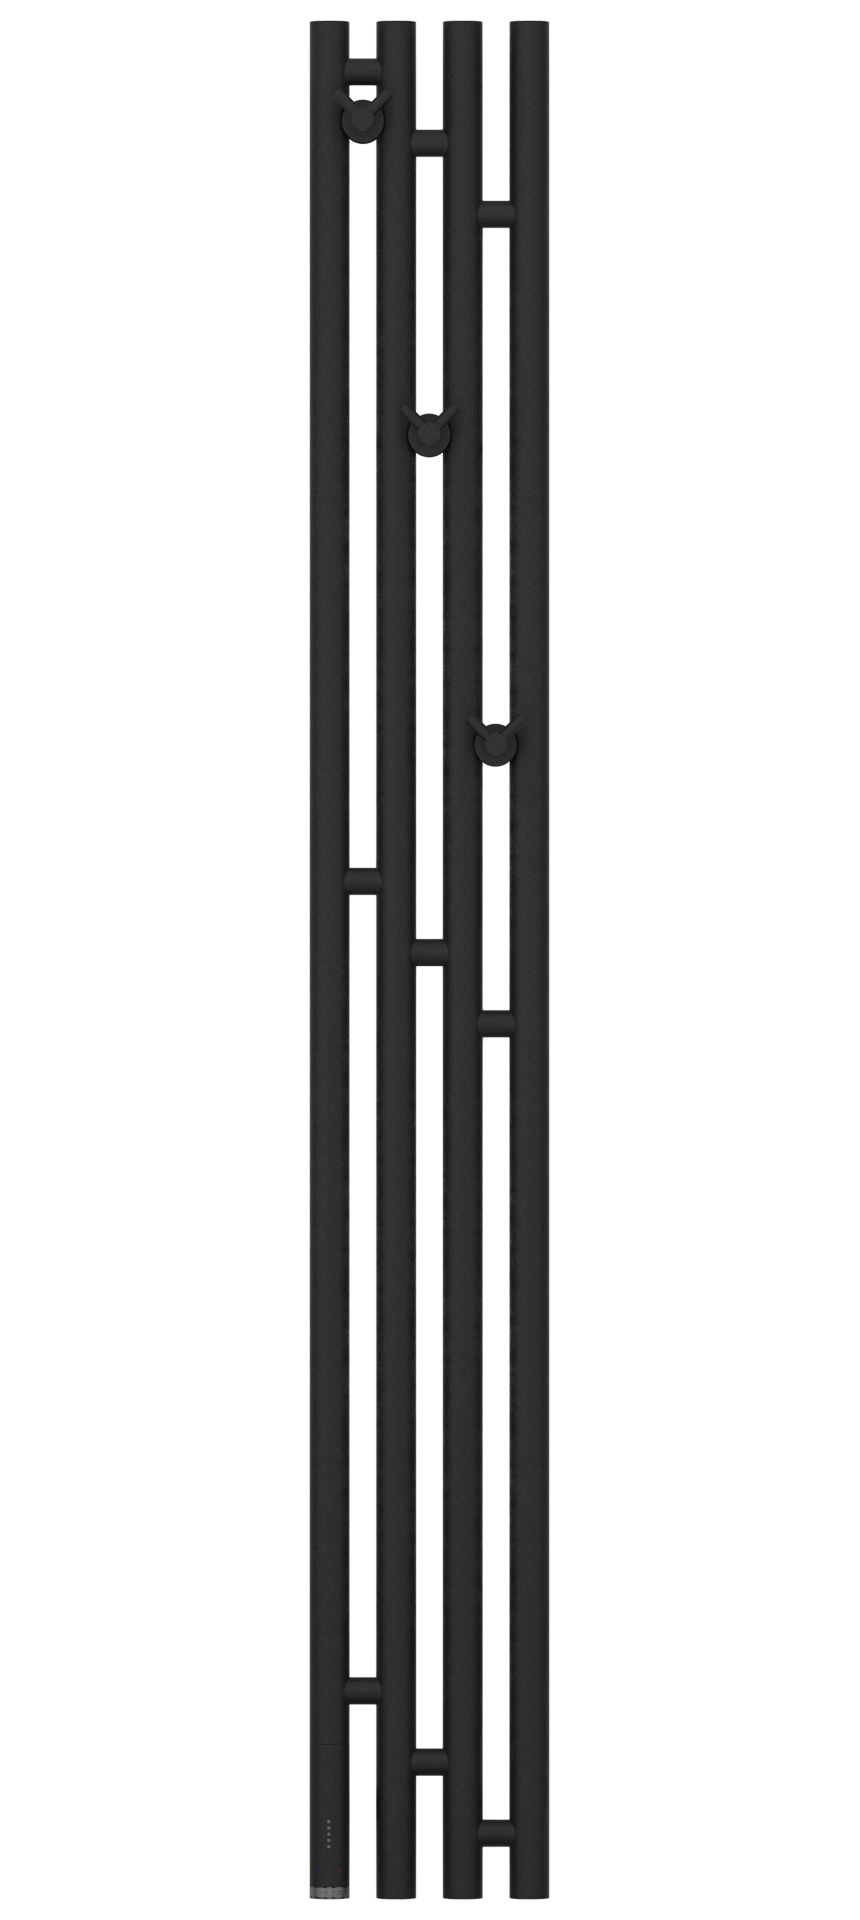 Полотенцесушитель электрический Сунержа Кантата 3.0 150х19,1 см 15-5846-1516 тёмный титан муар